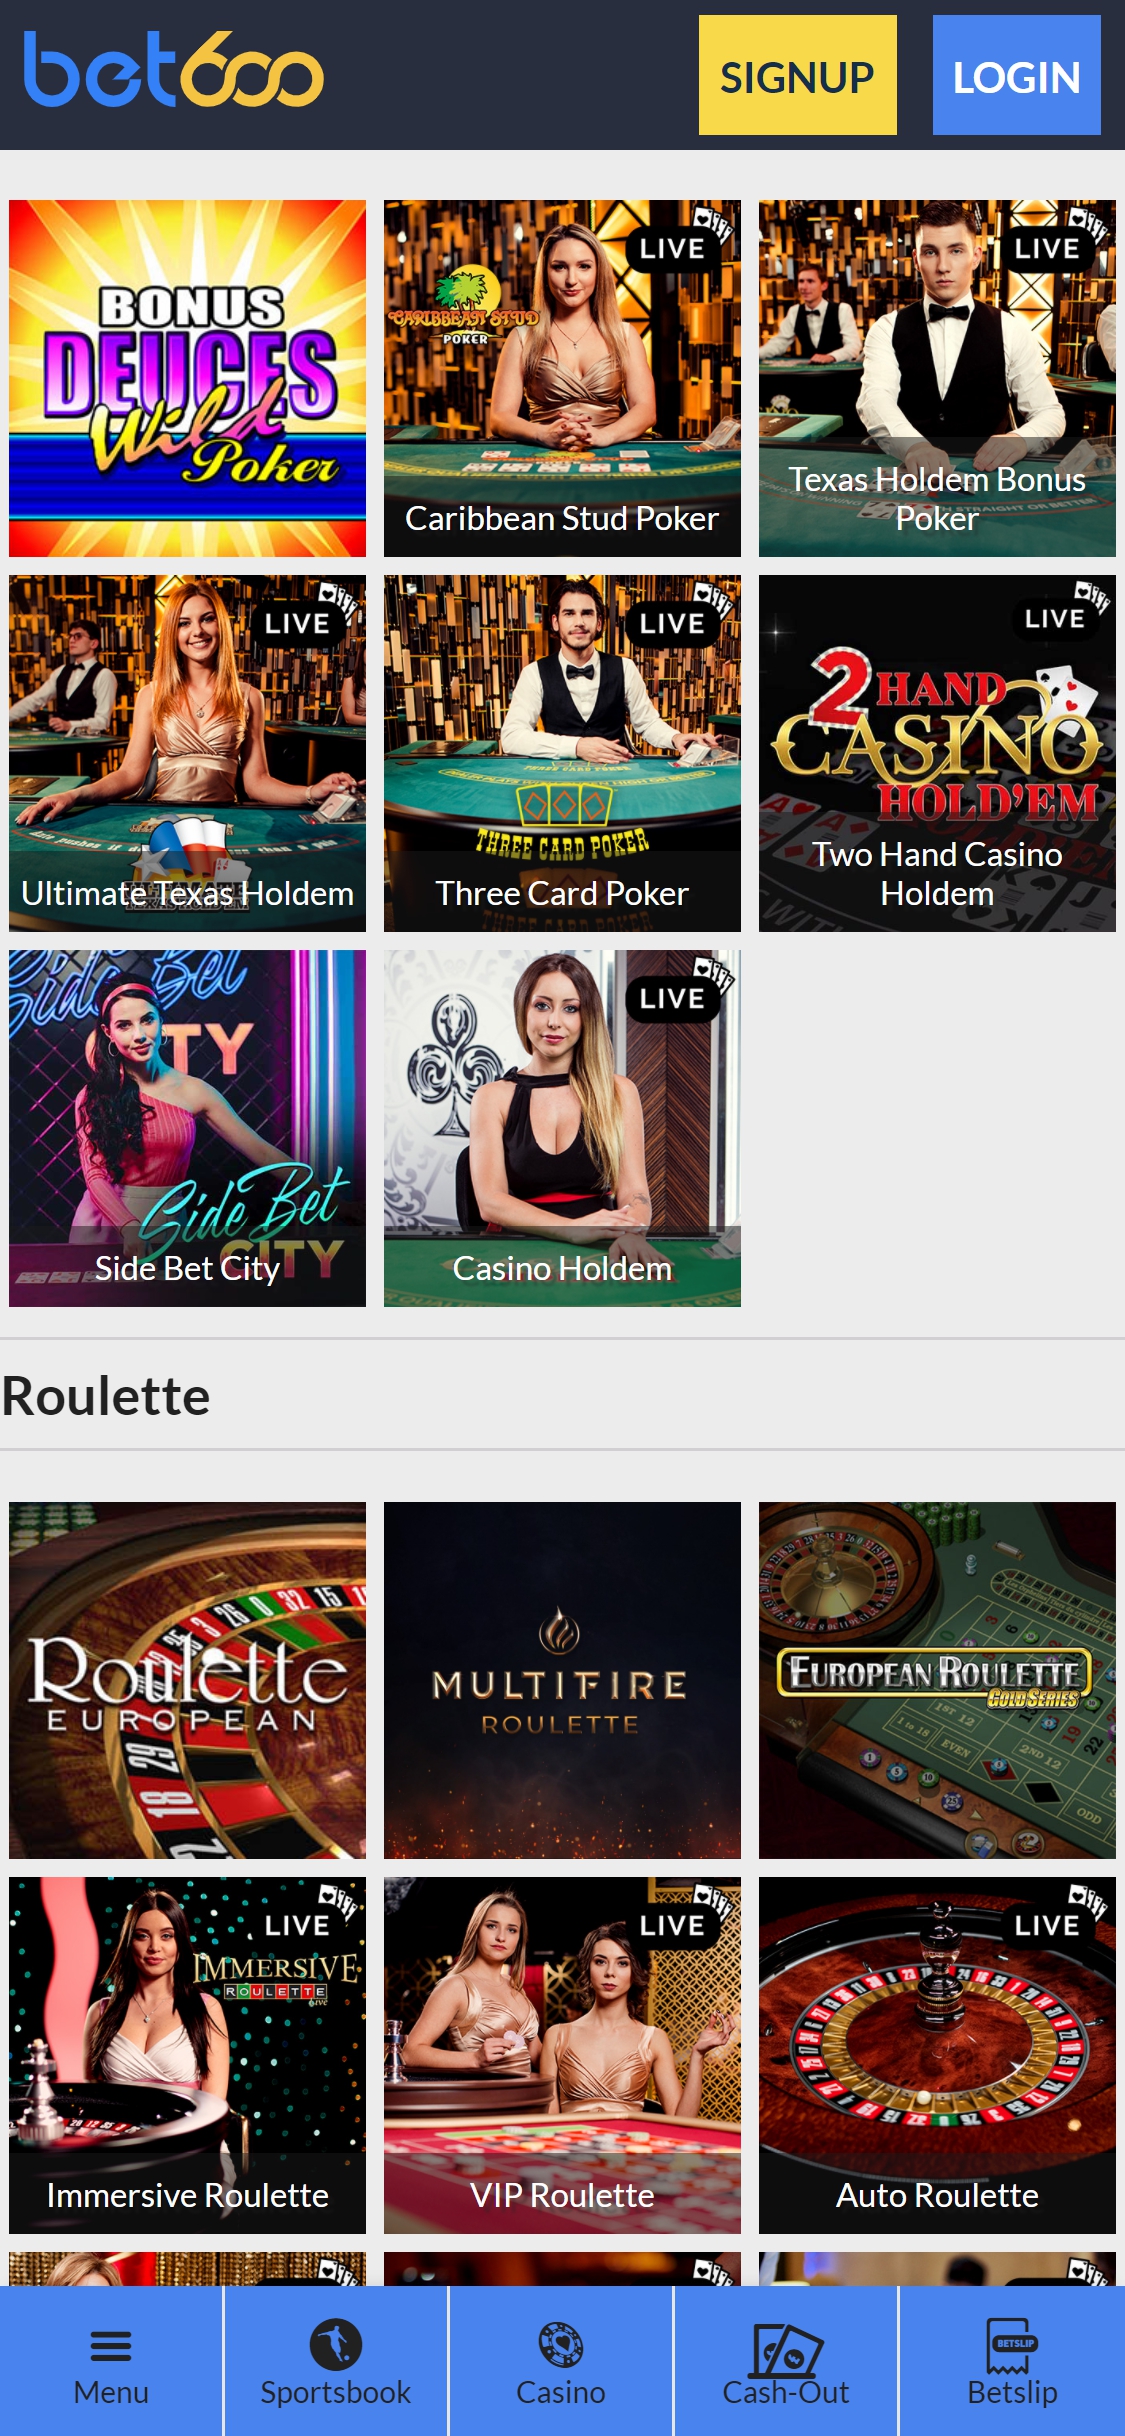 Bet 600 Casino Mobile Live Dealer Games Review